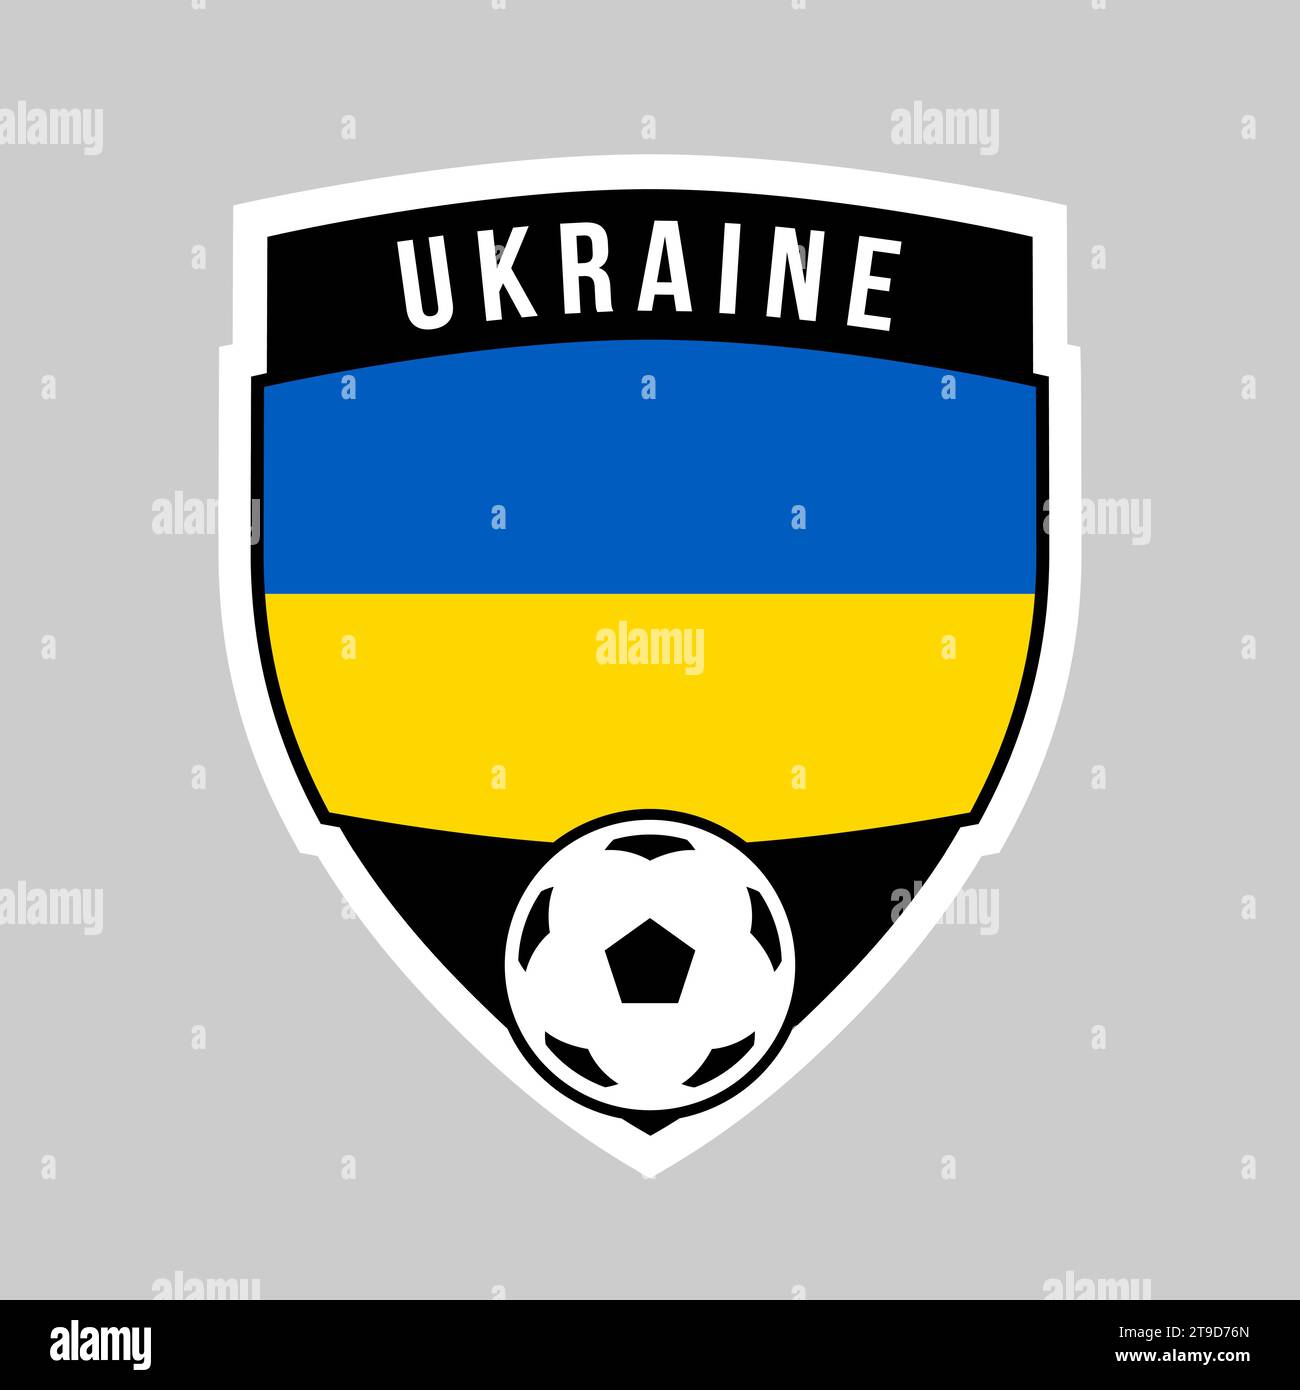 Illustration of Shield Team Badge of Ukraine for Football Tournament Stock Vector